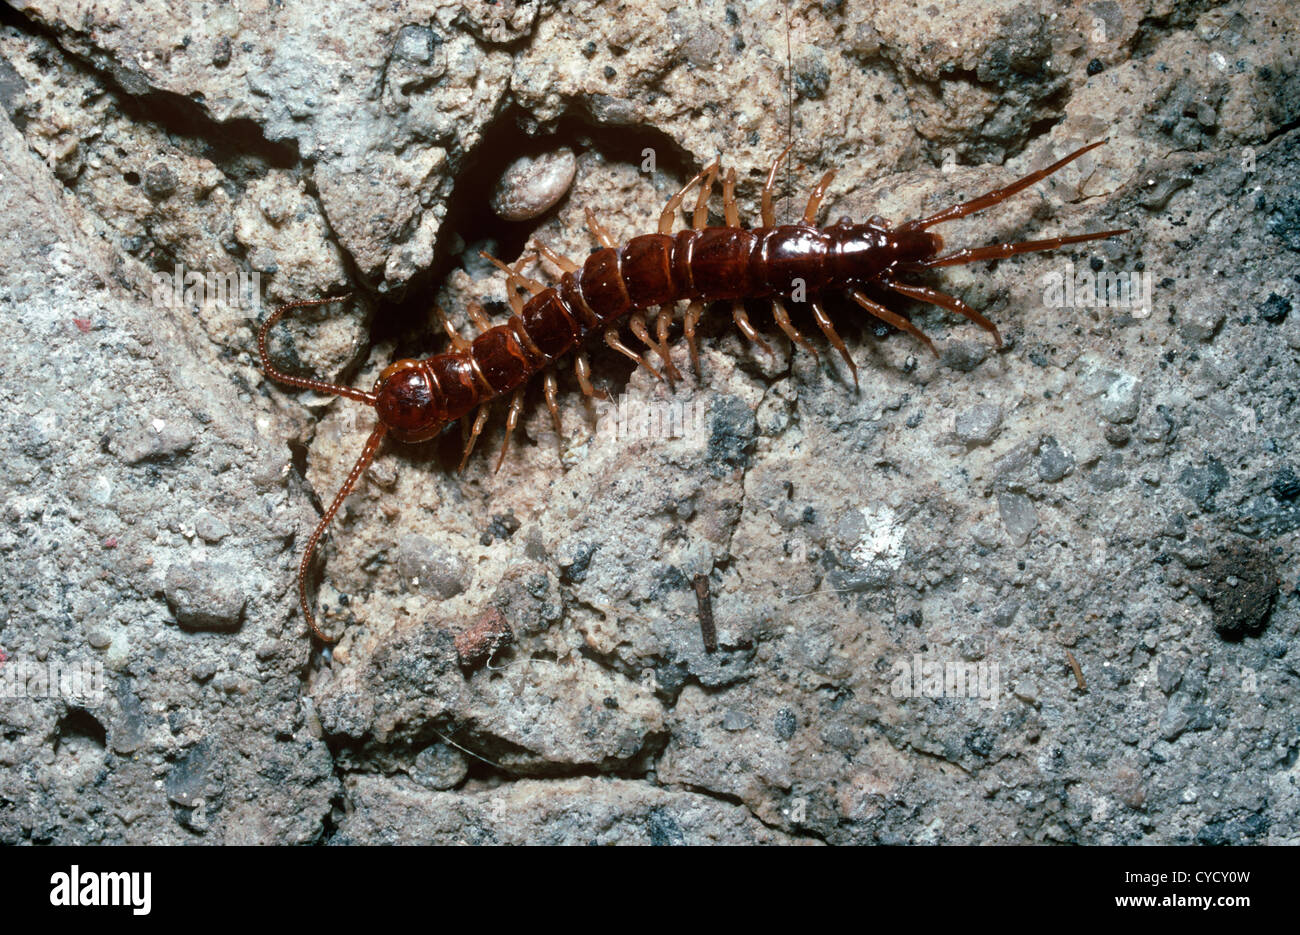 Centipede (Lithobius pilicornis: Lithobiidae) in a garden, UK Stock Photo